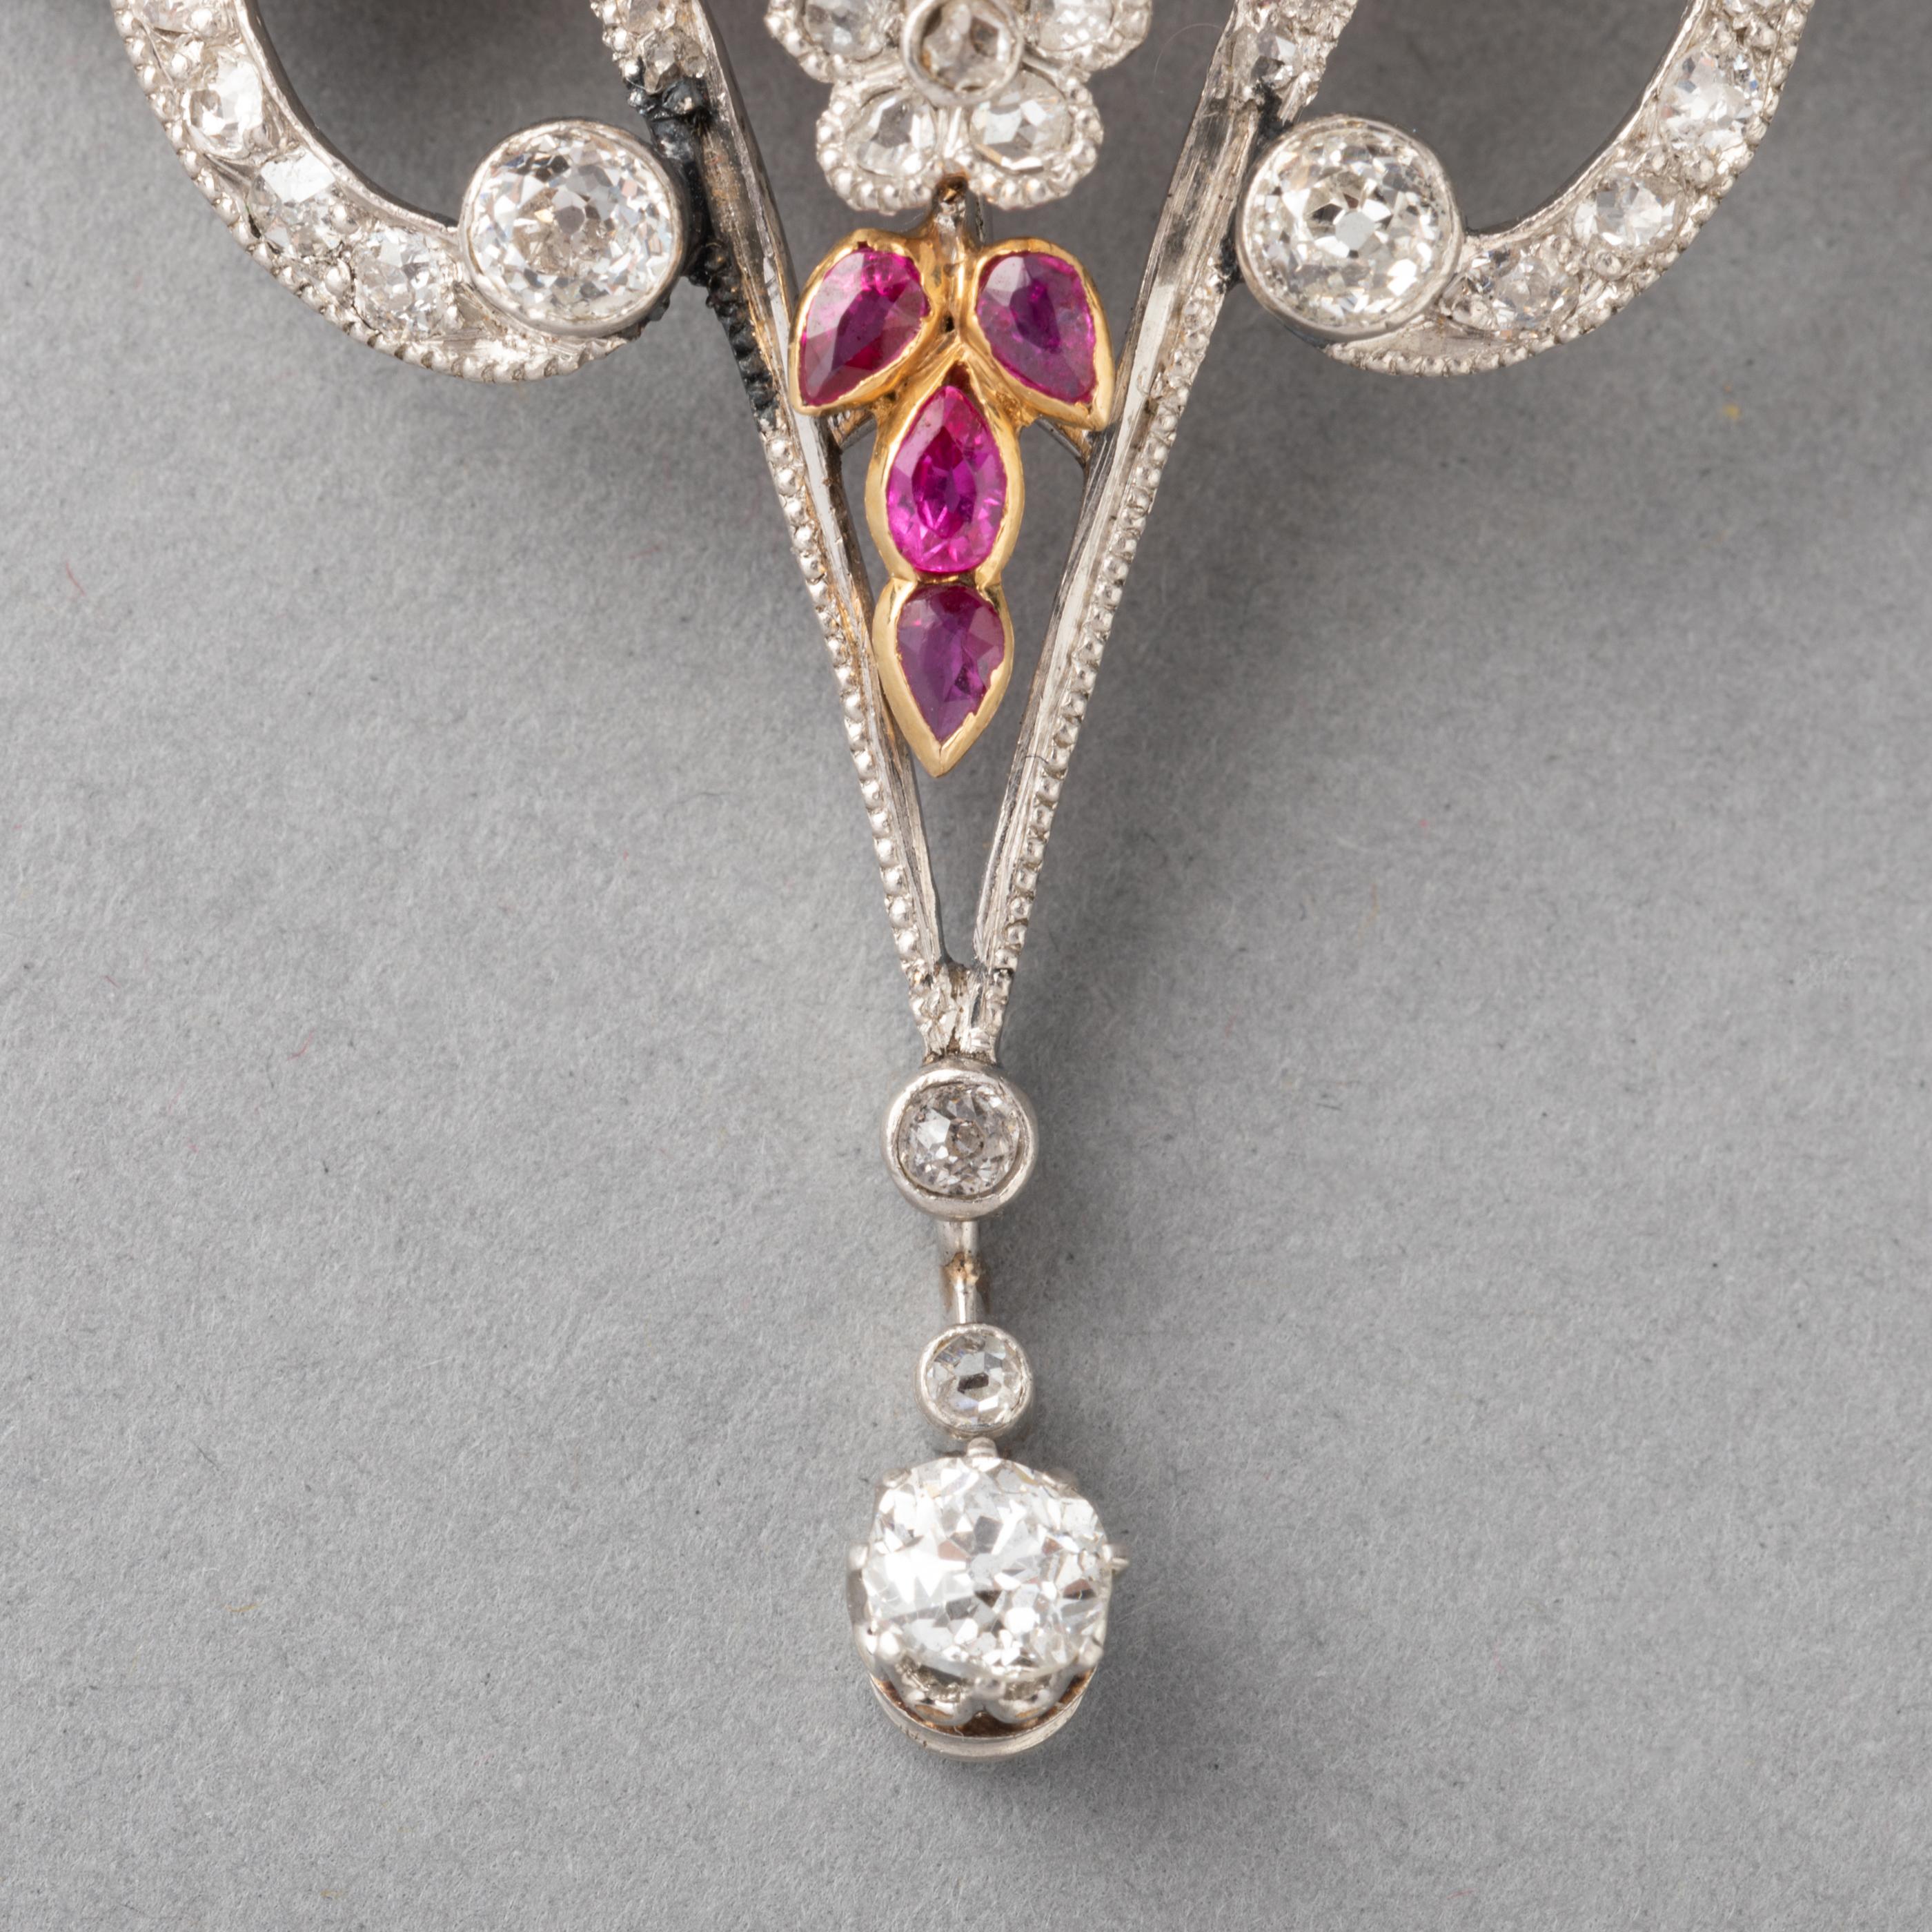 Women's Antique Gold Diamonds and Rubies Pendant Necklace